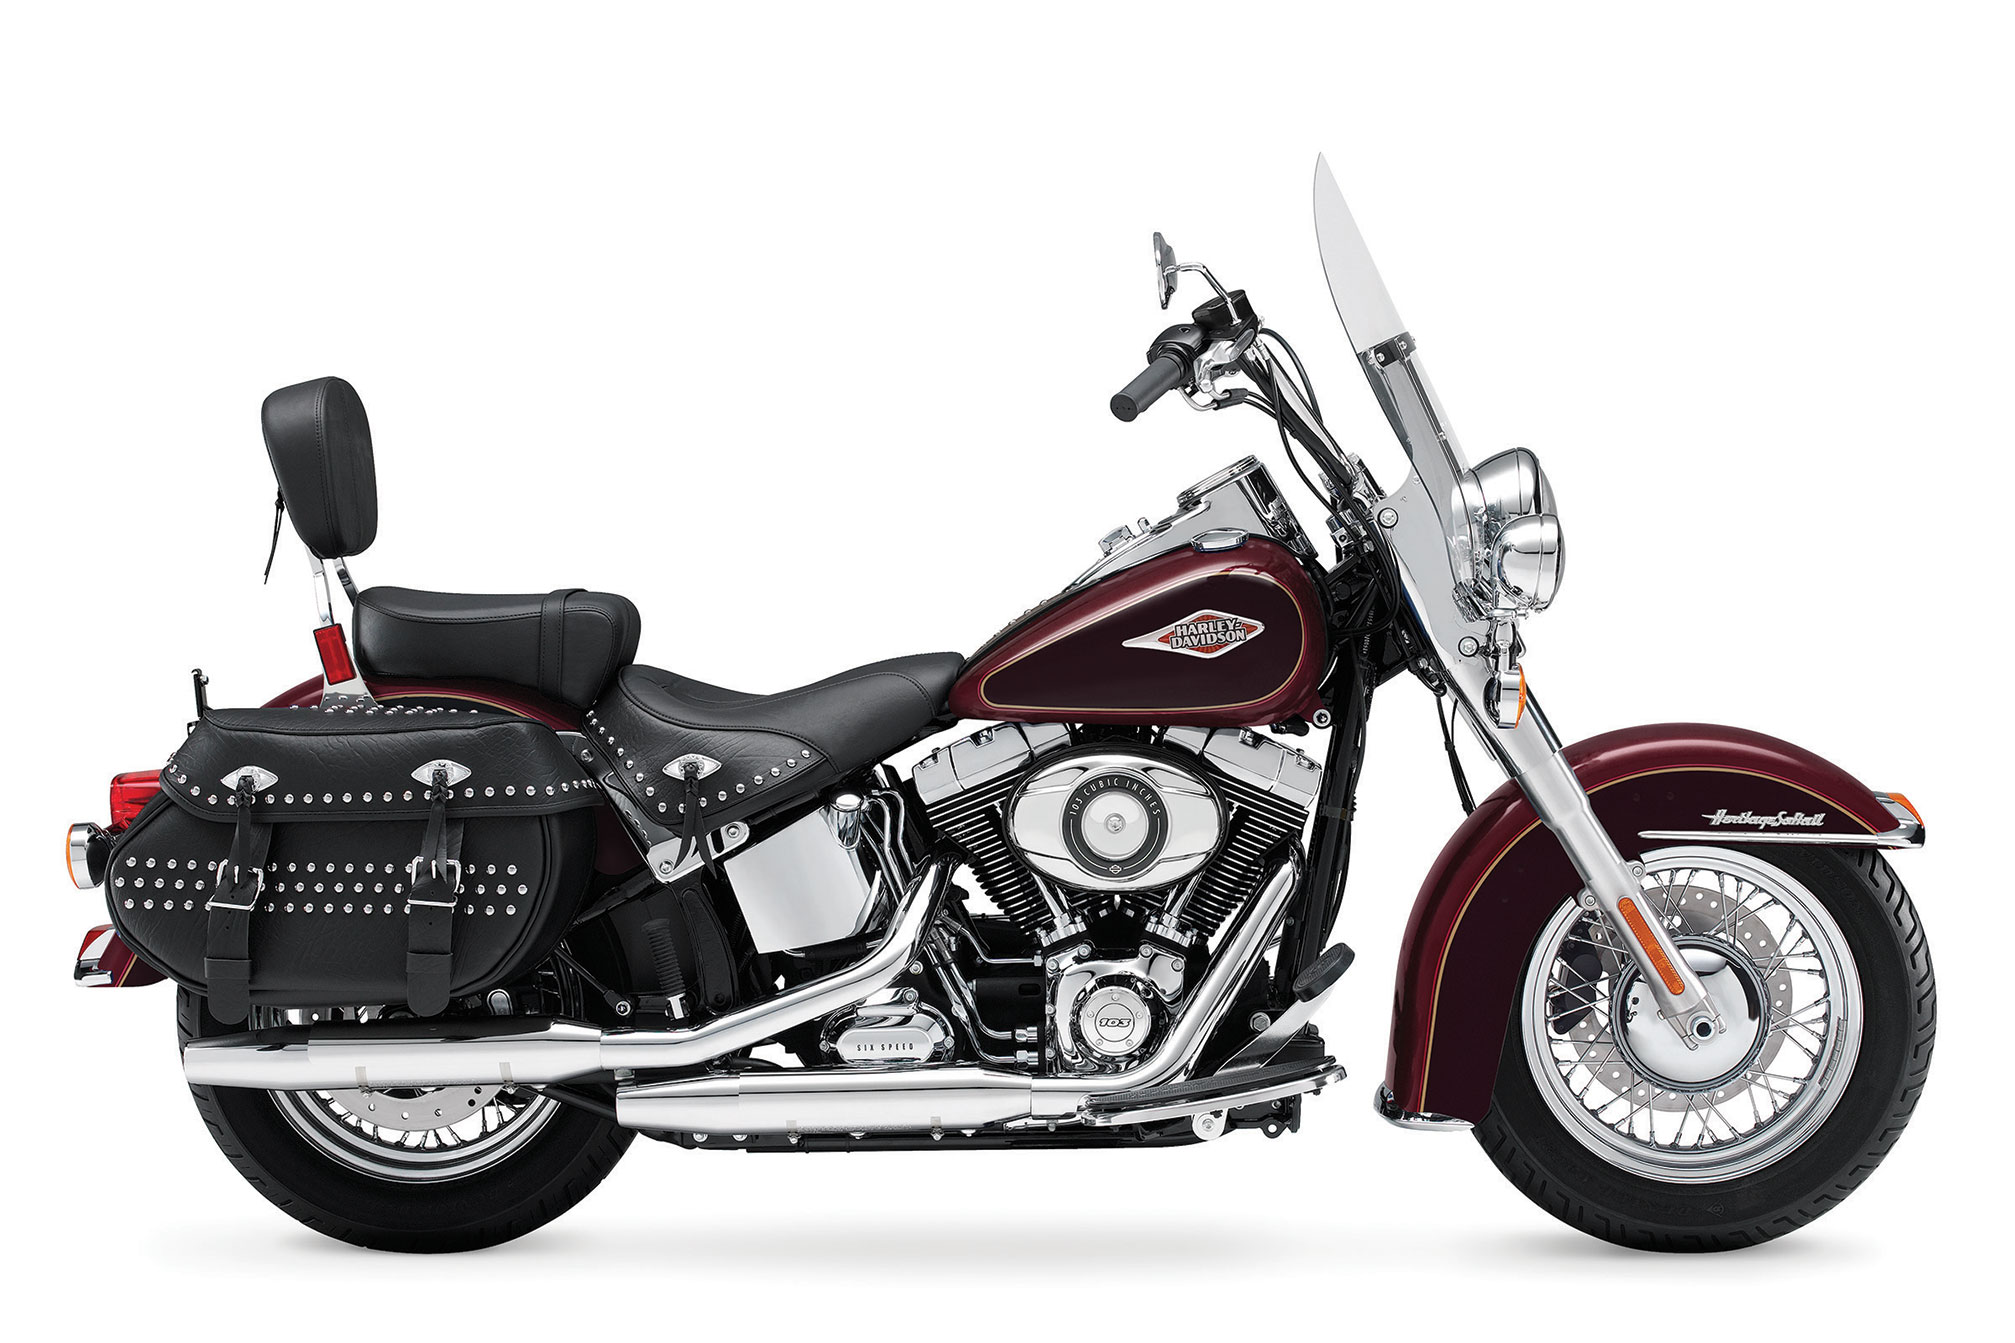 2015 Harley Davidson Flstc Heritage Softail Classic Review